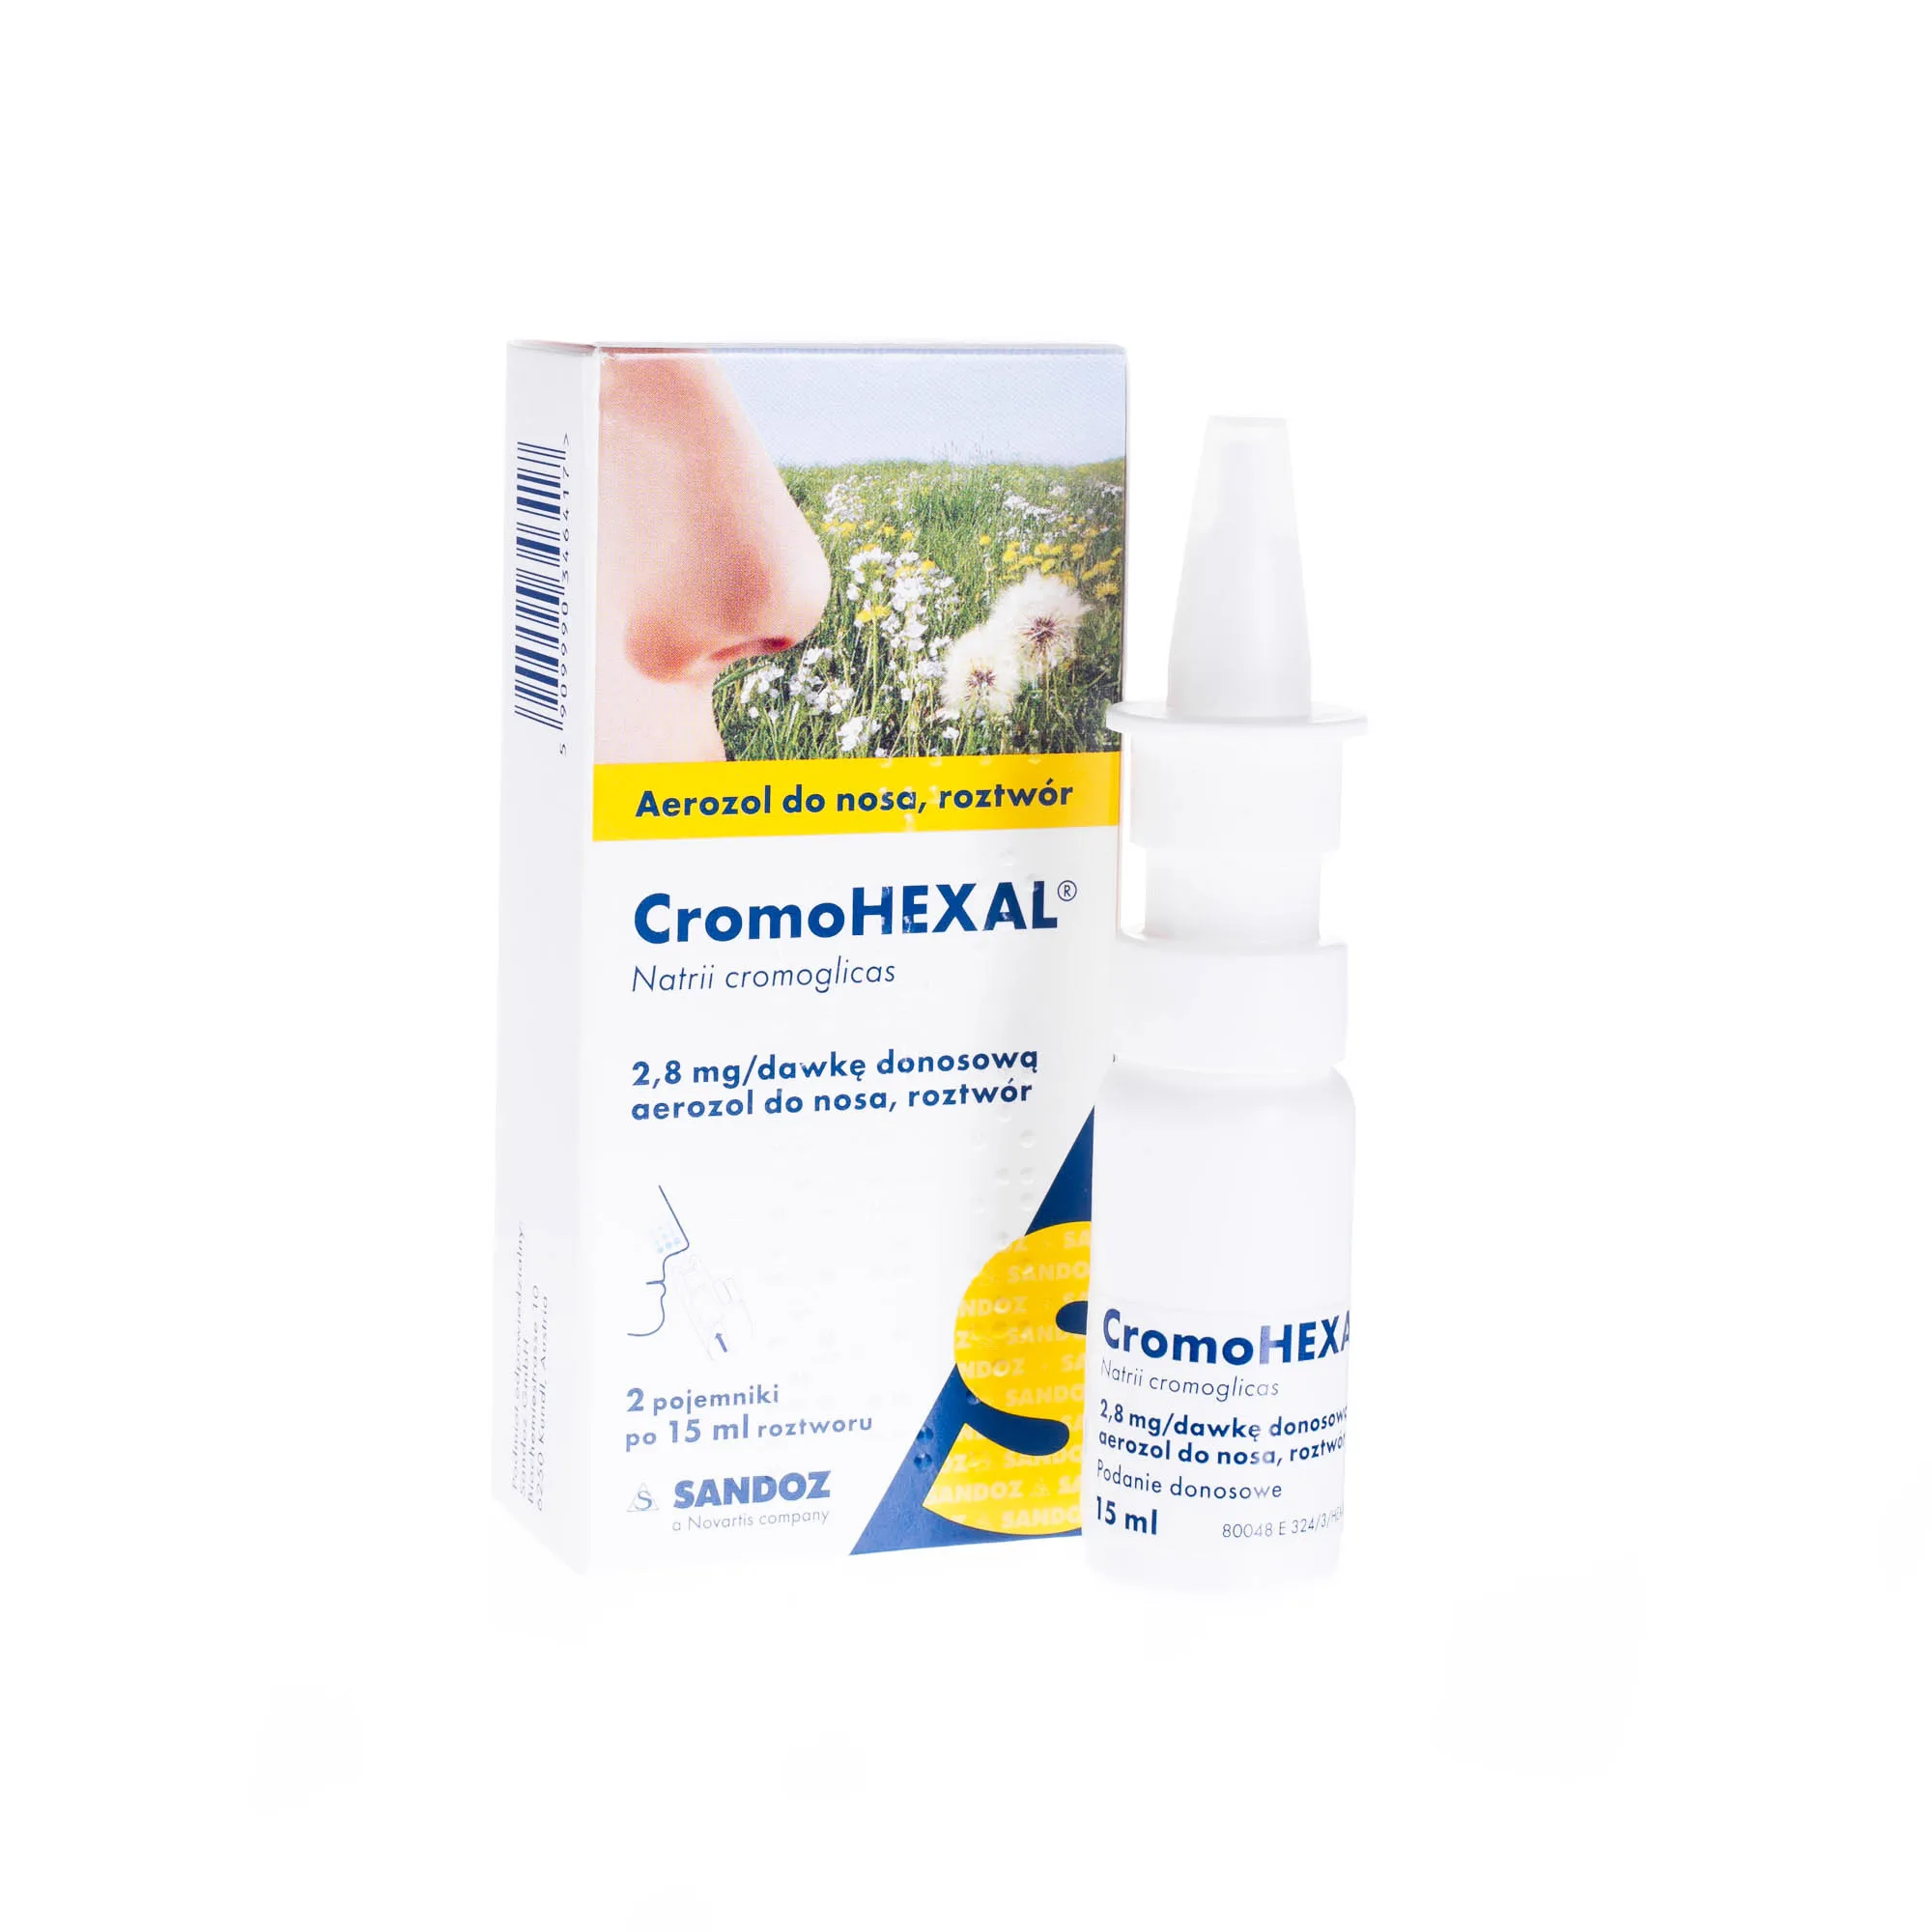 CromoHEXAL - aerozol do nosa, roztwór, 2 pojemniki po 15 ml